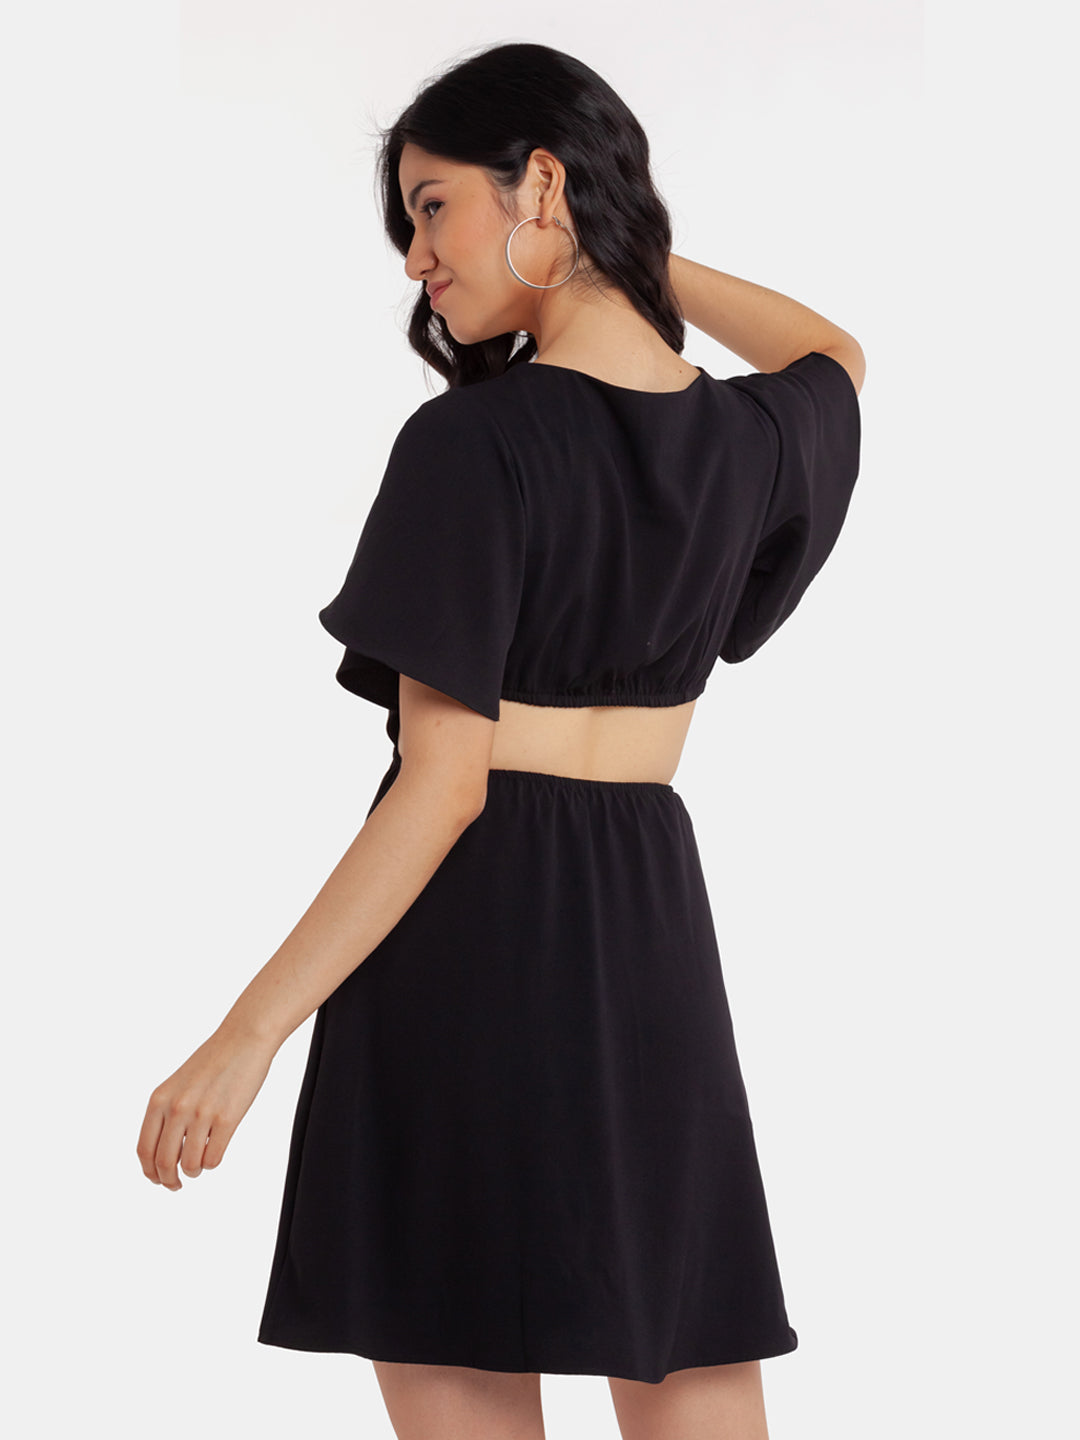 Black Solid Cutout Short Dress For Women